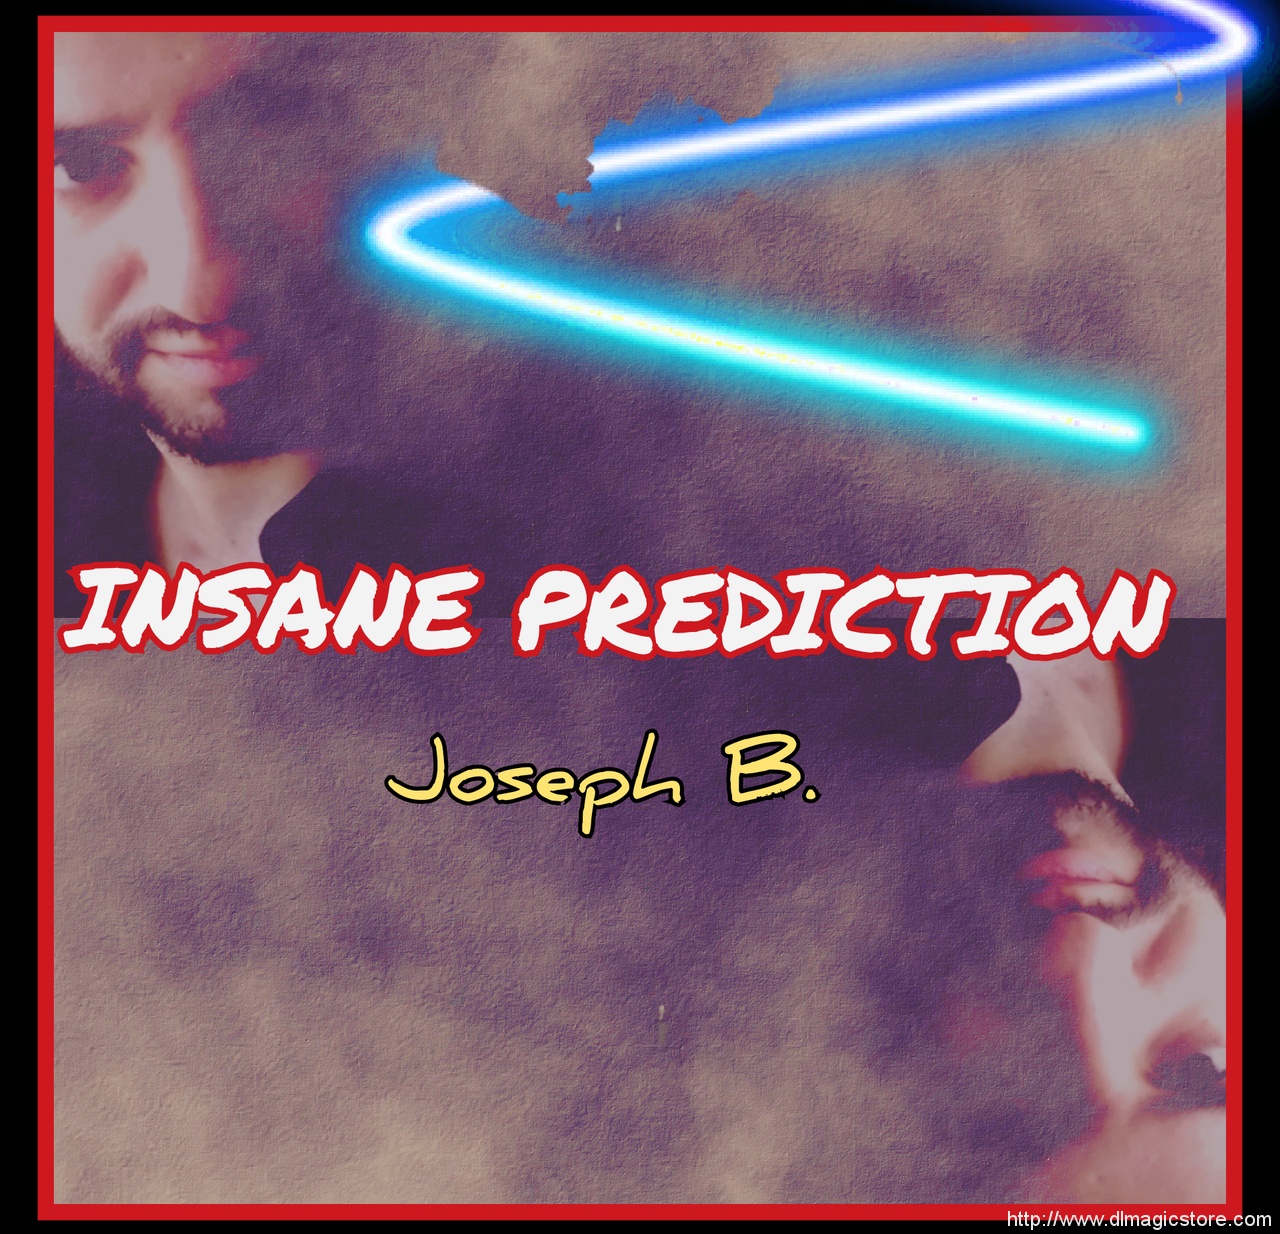 Insane Prediction by Joseph B